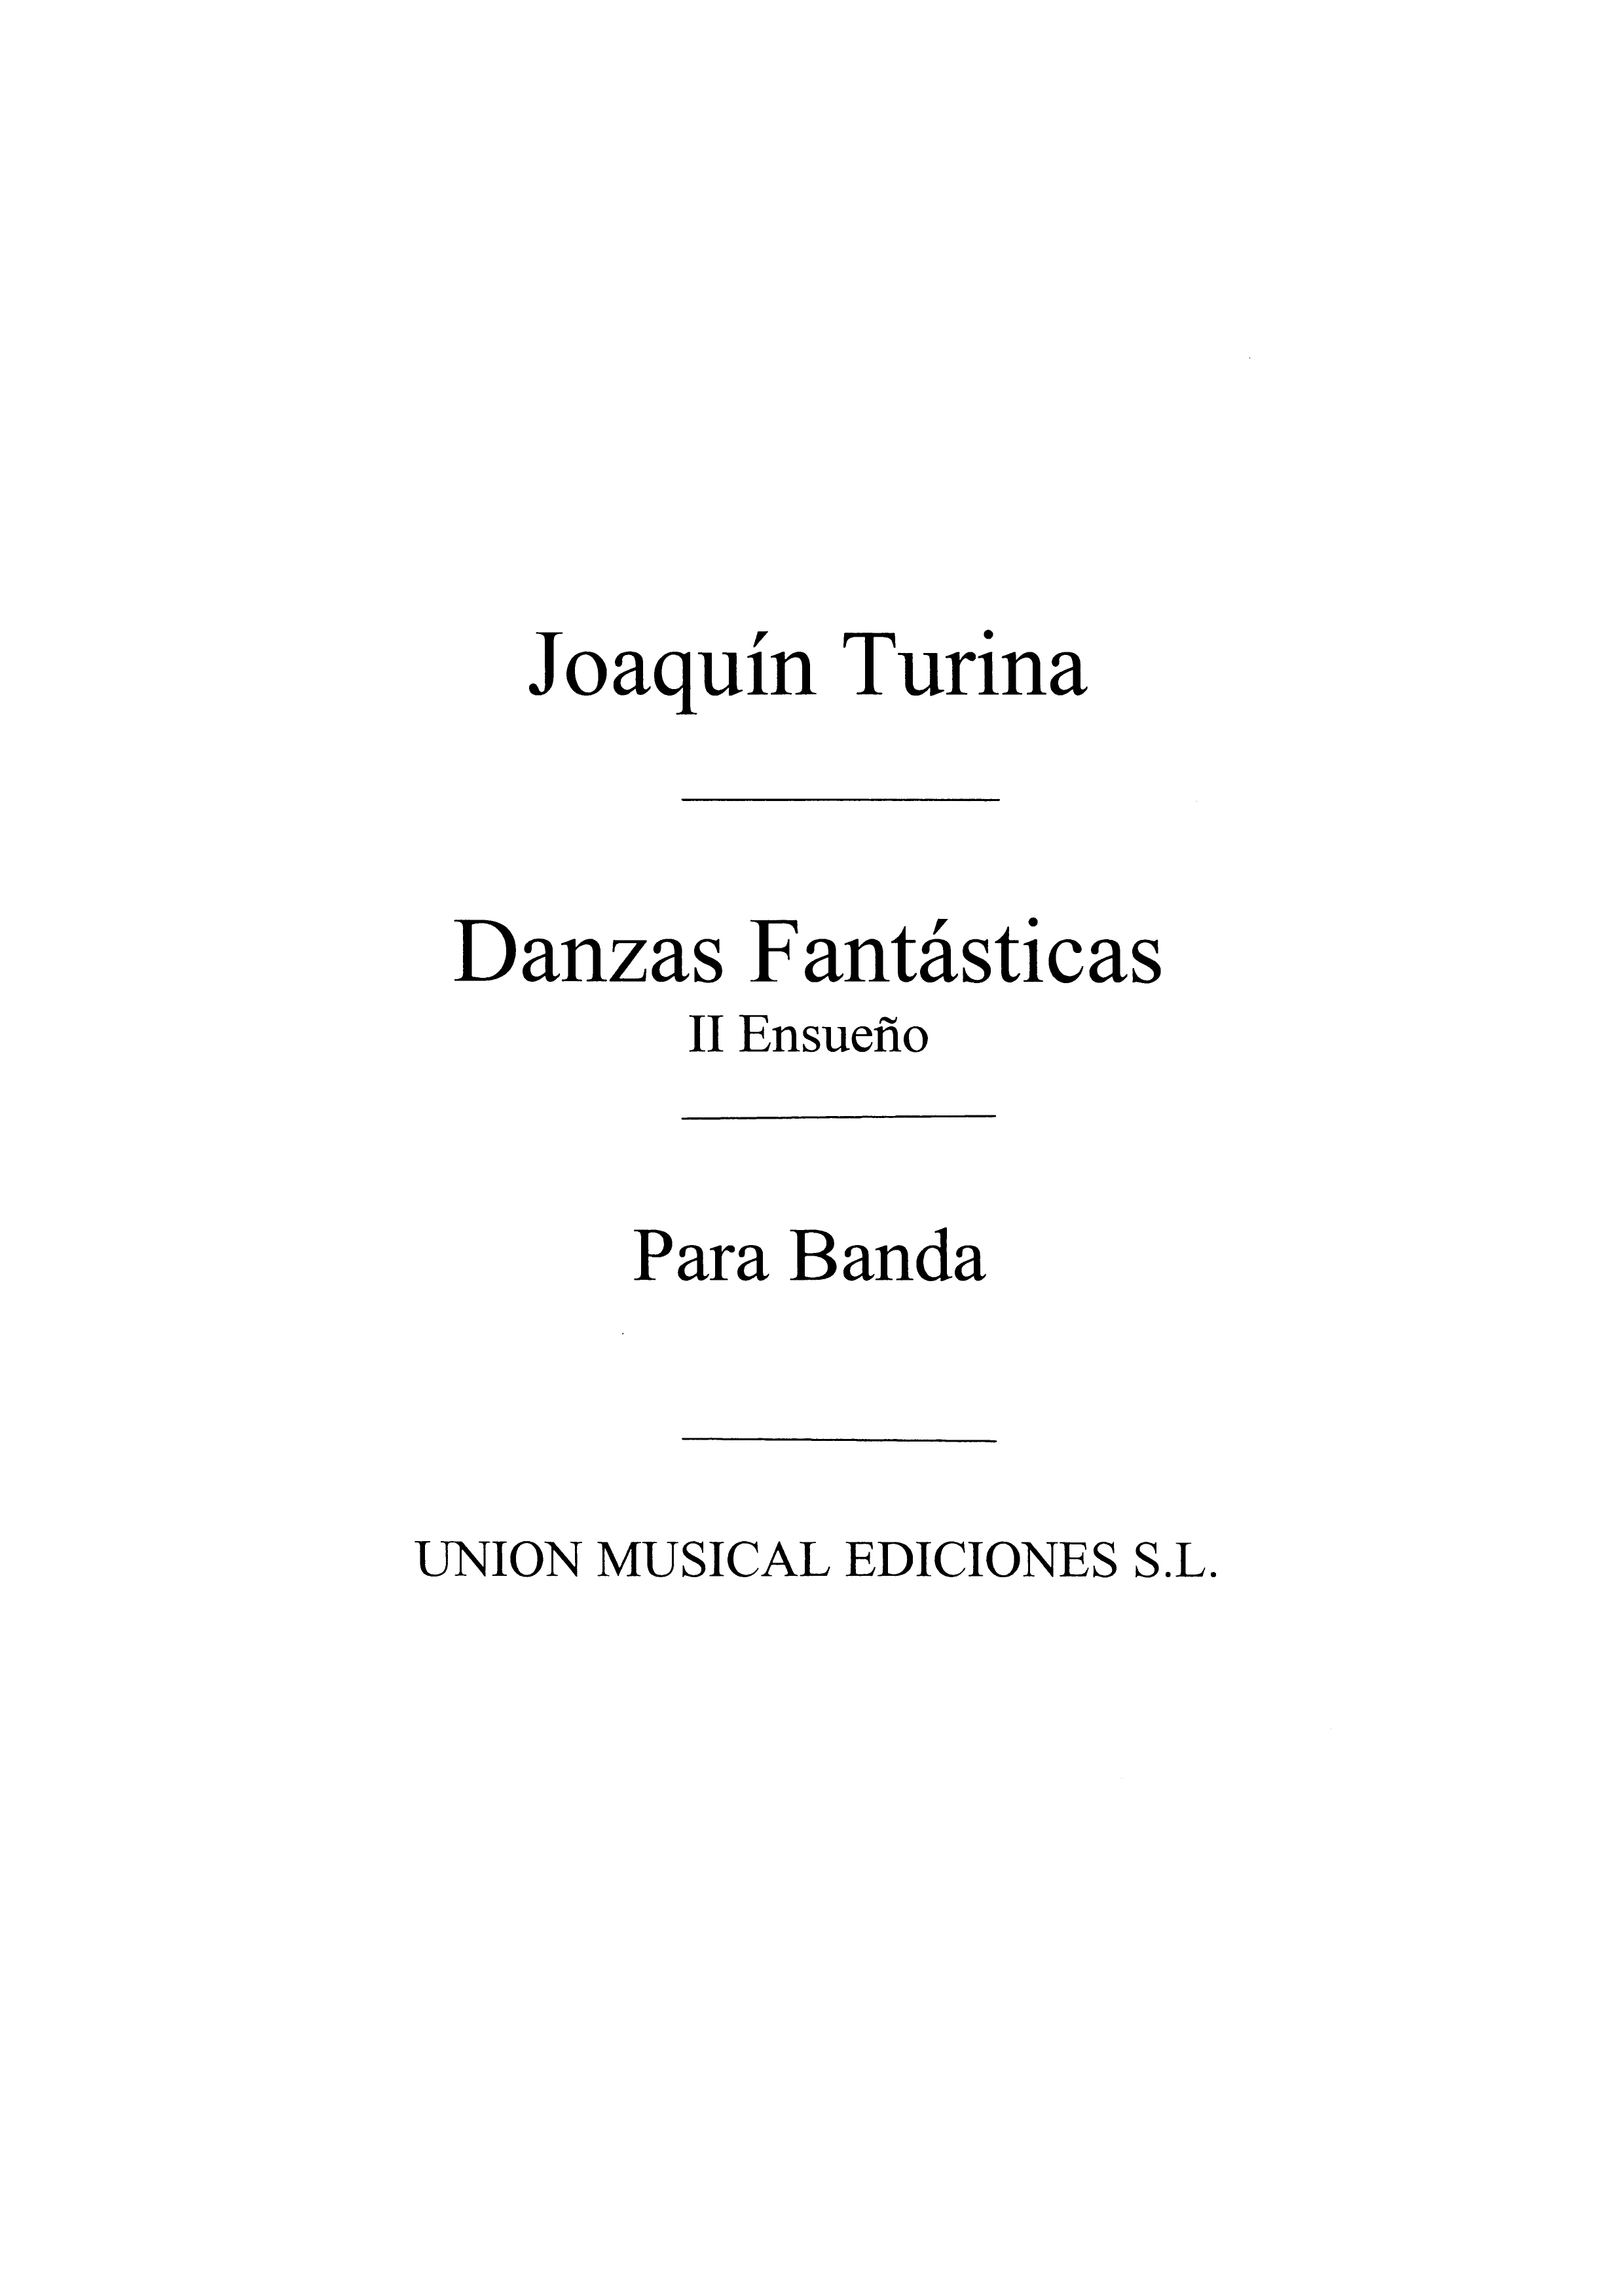 Joaquín Turina: Ensueno From Danzas Fantasticas No.2: Concert Band: Instrumental